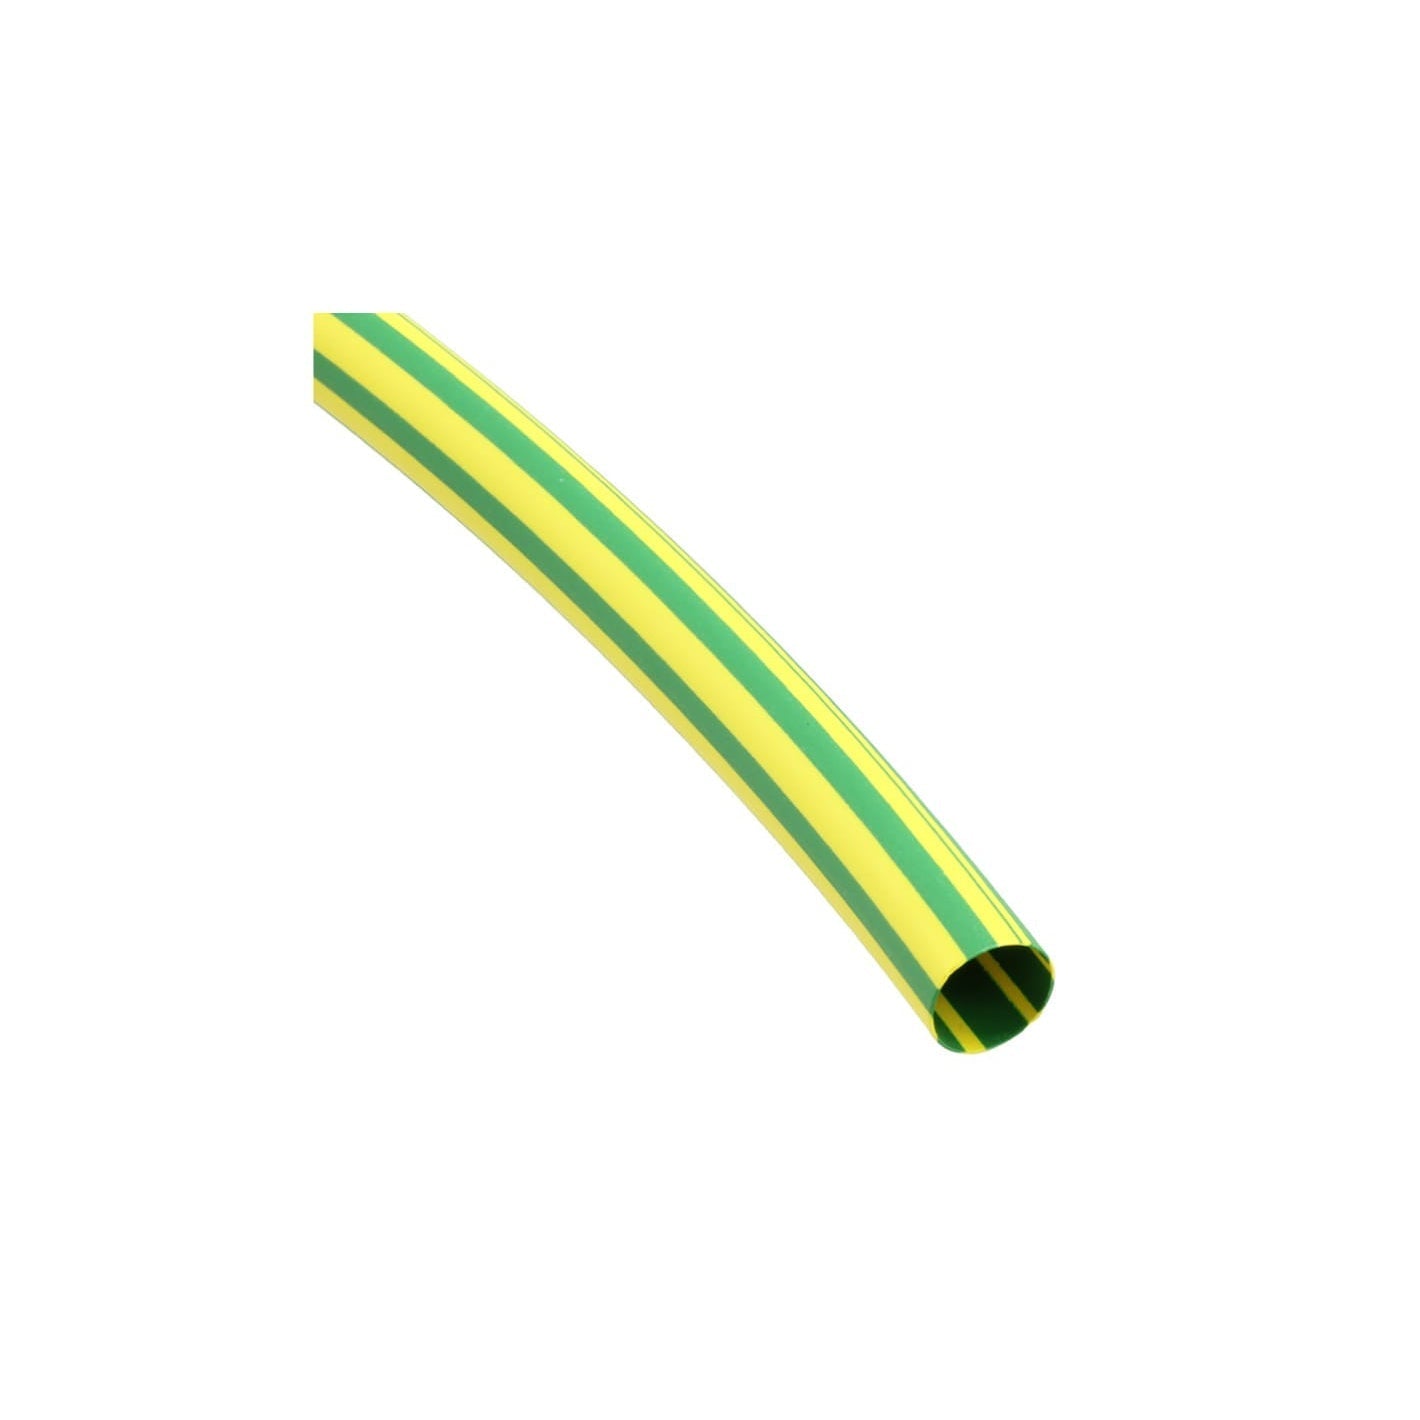 Heat Shrink Tubing 2:1 p/meter »-3D-𝐼⌀3.2𝑚𝑚-Green/Yellow-diyshop.co.za